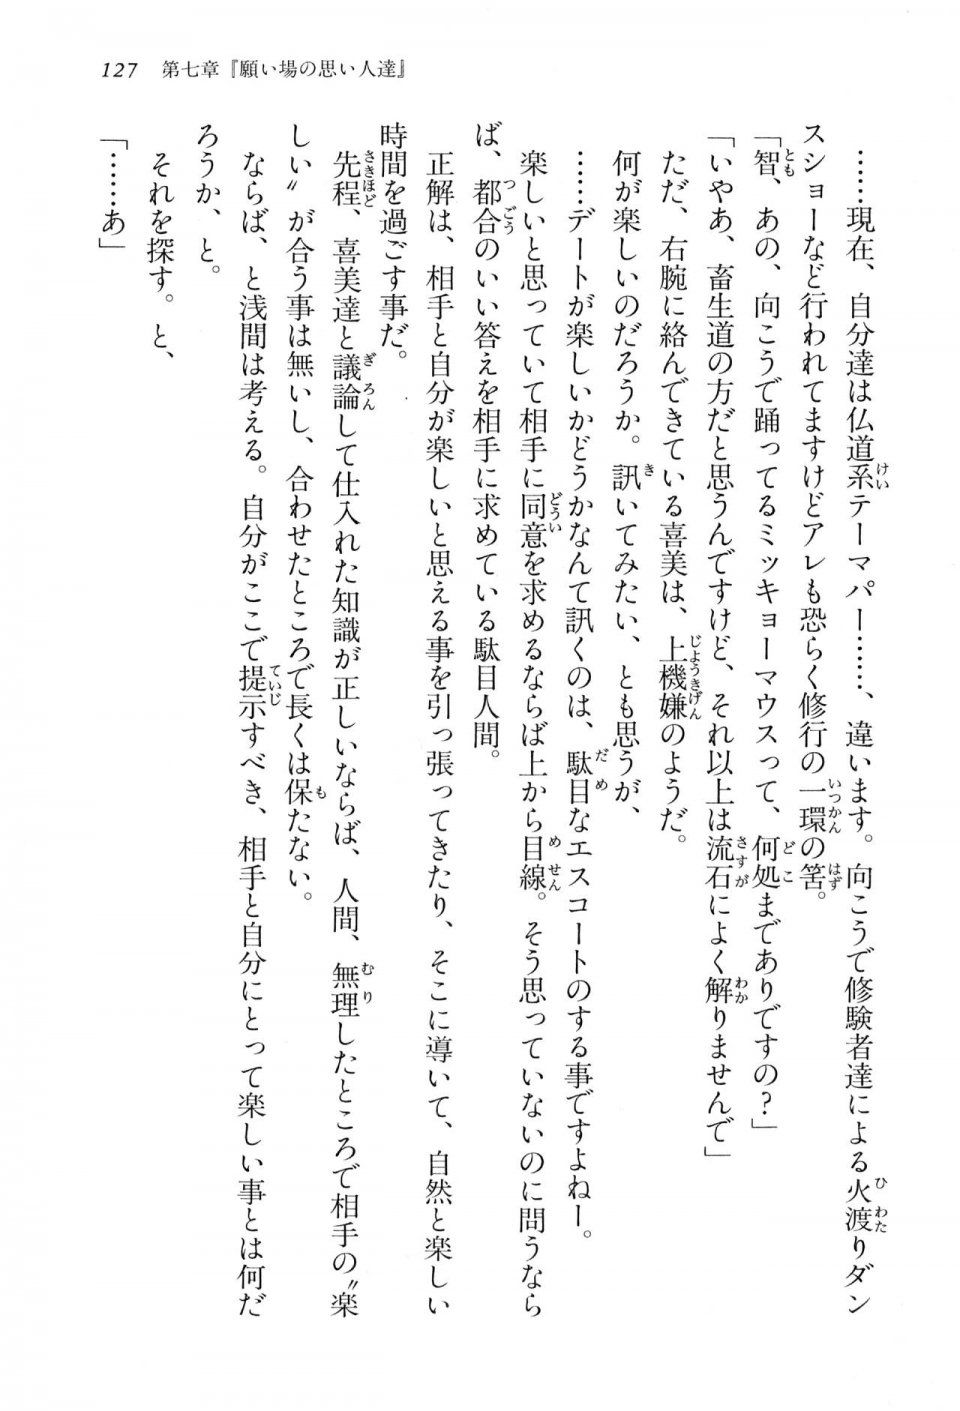 Kyoukai Senjou no Horizon BD Special Mininovel Vol 2(1B) - Photo #131